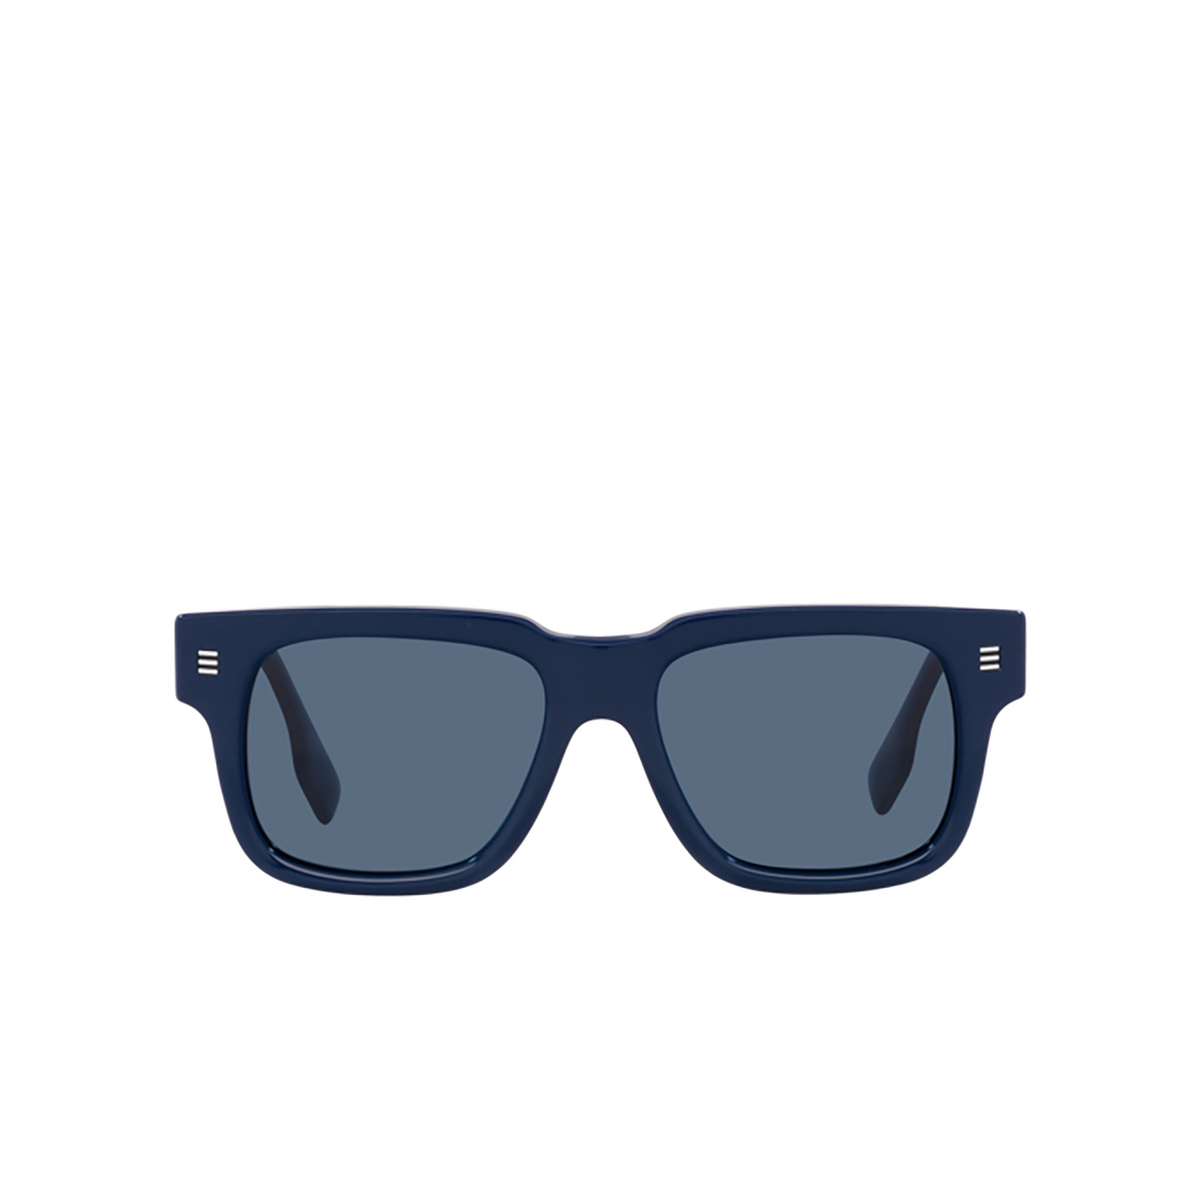 Burberry HAYDEN Sunglasses 405880 Blue - front view